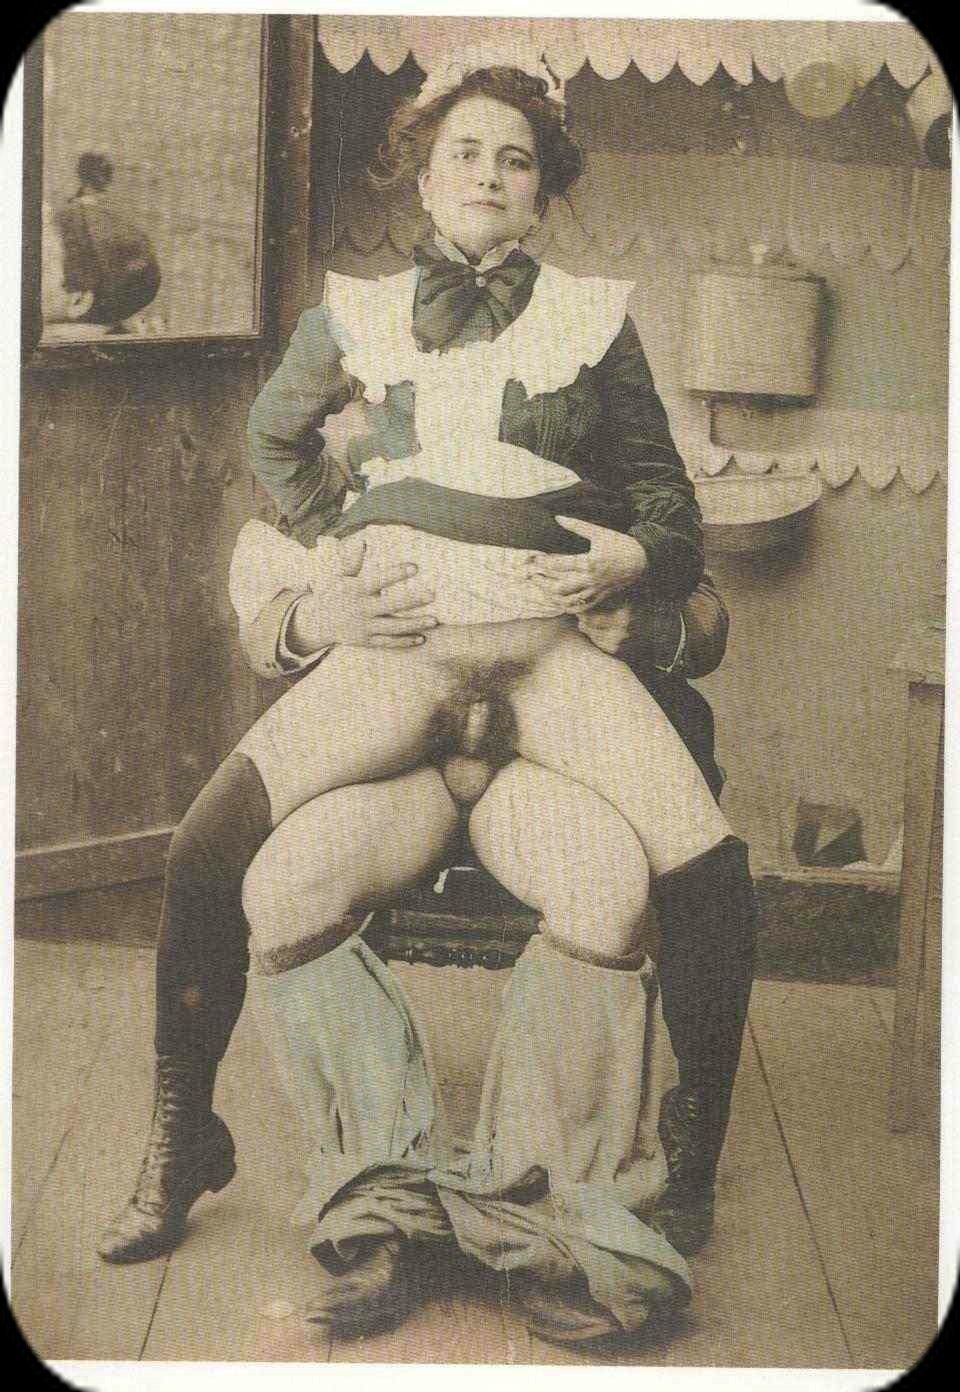 порно ретро фото 19 века фото фото 90